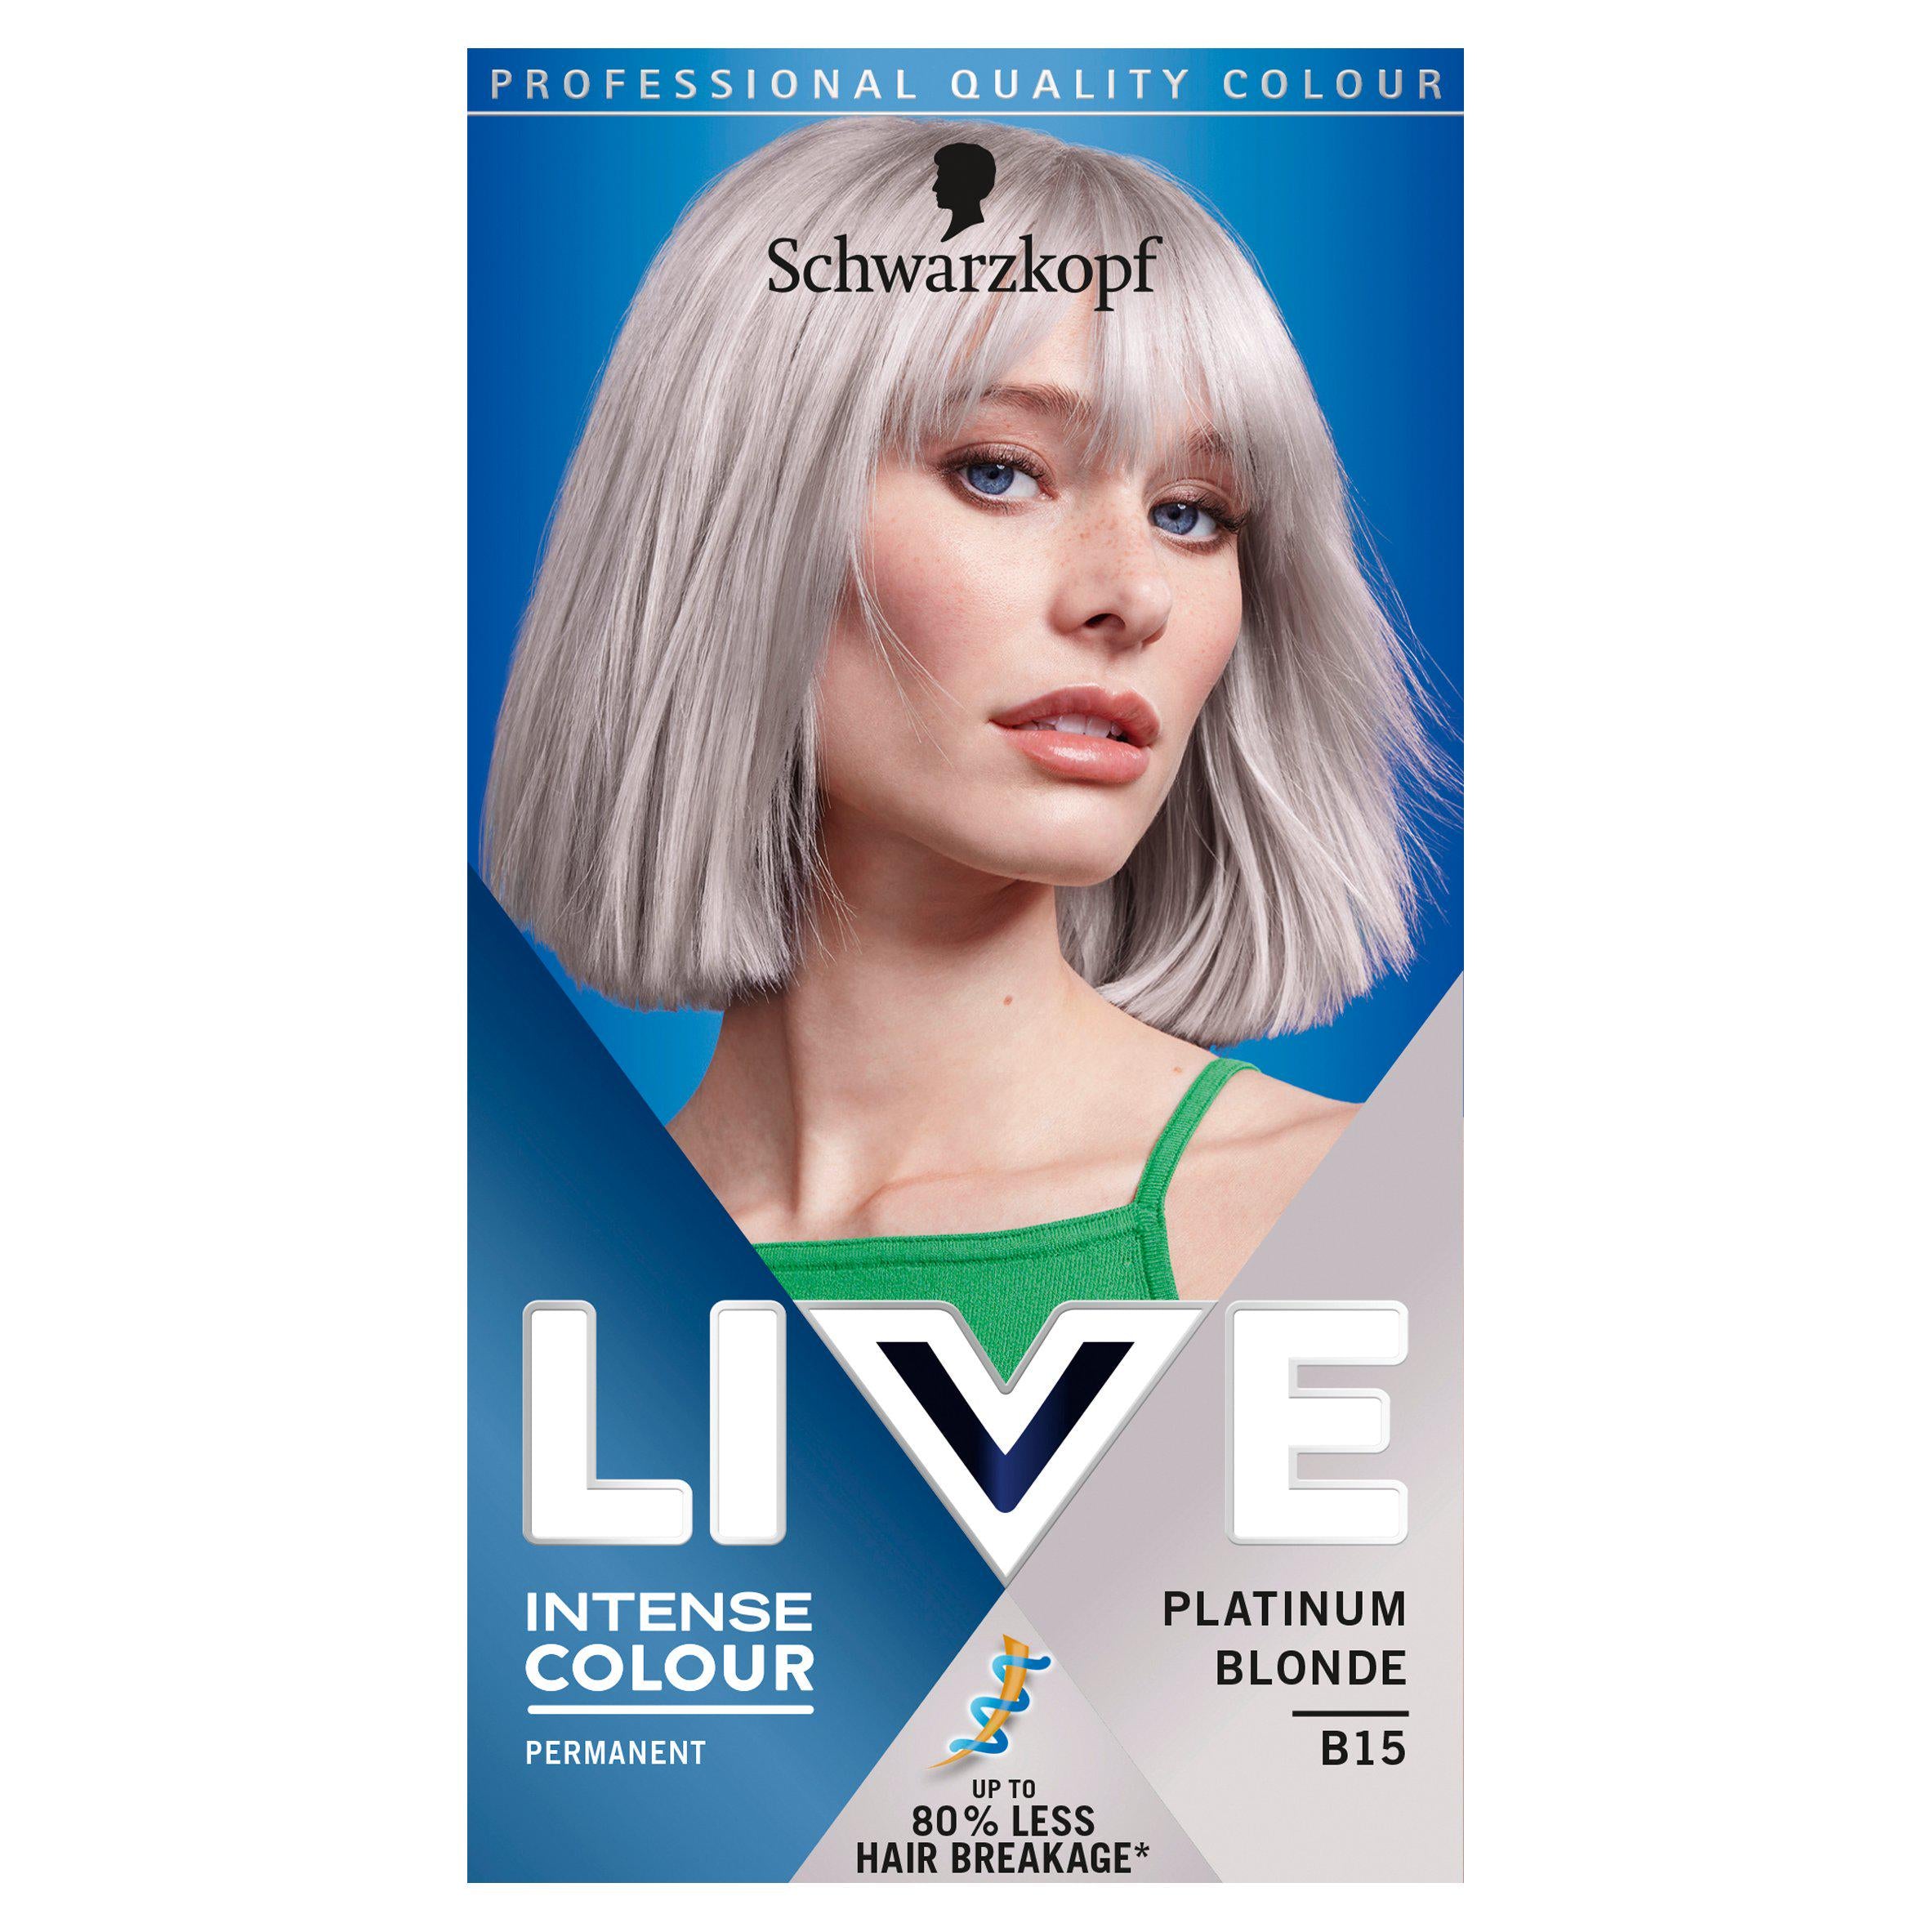 Schwarzkopf Live Intense Colour Permanent Platinum Blonde B15 - McGrocer